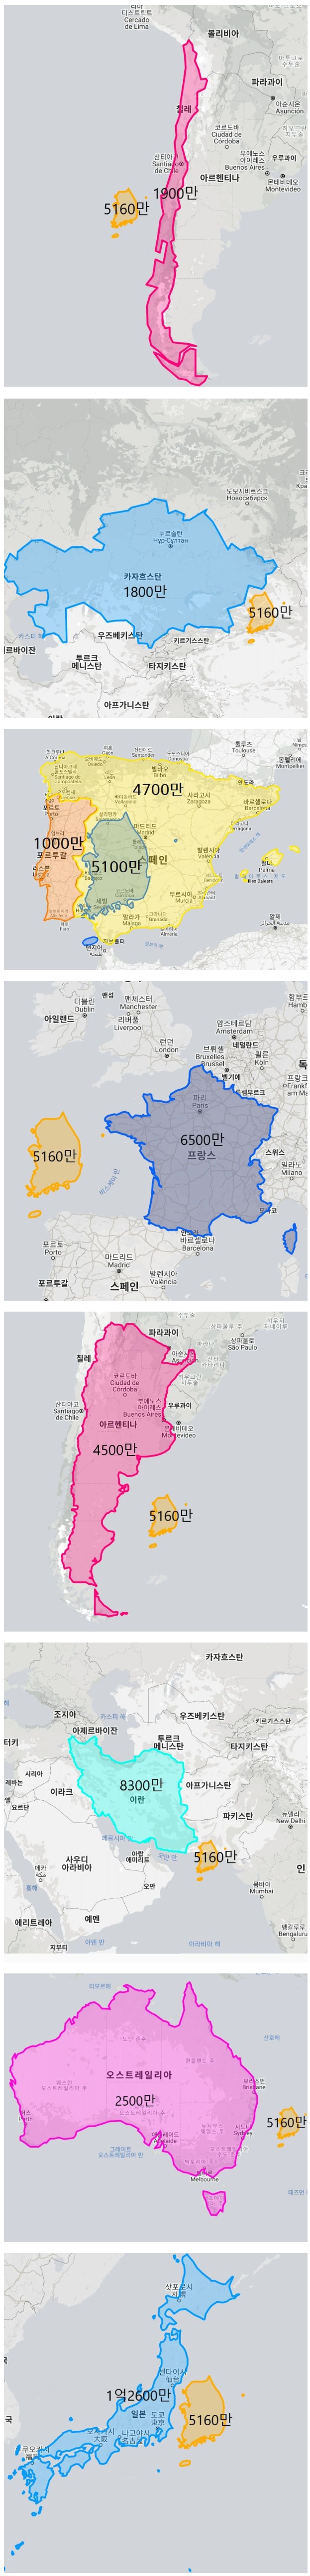 Comparison of Korean population and area